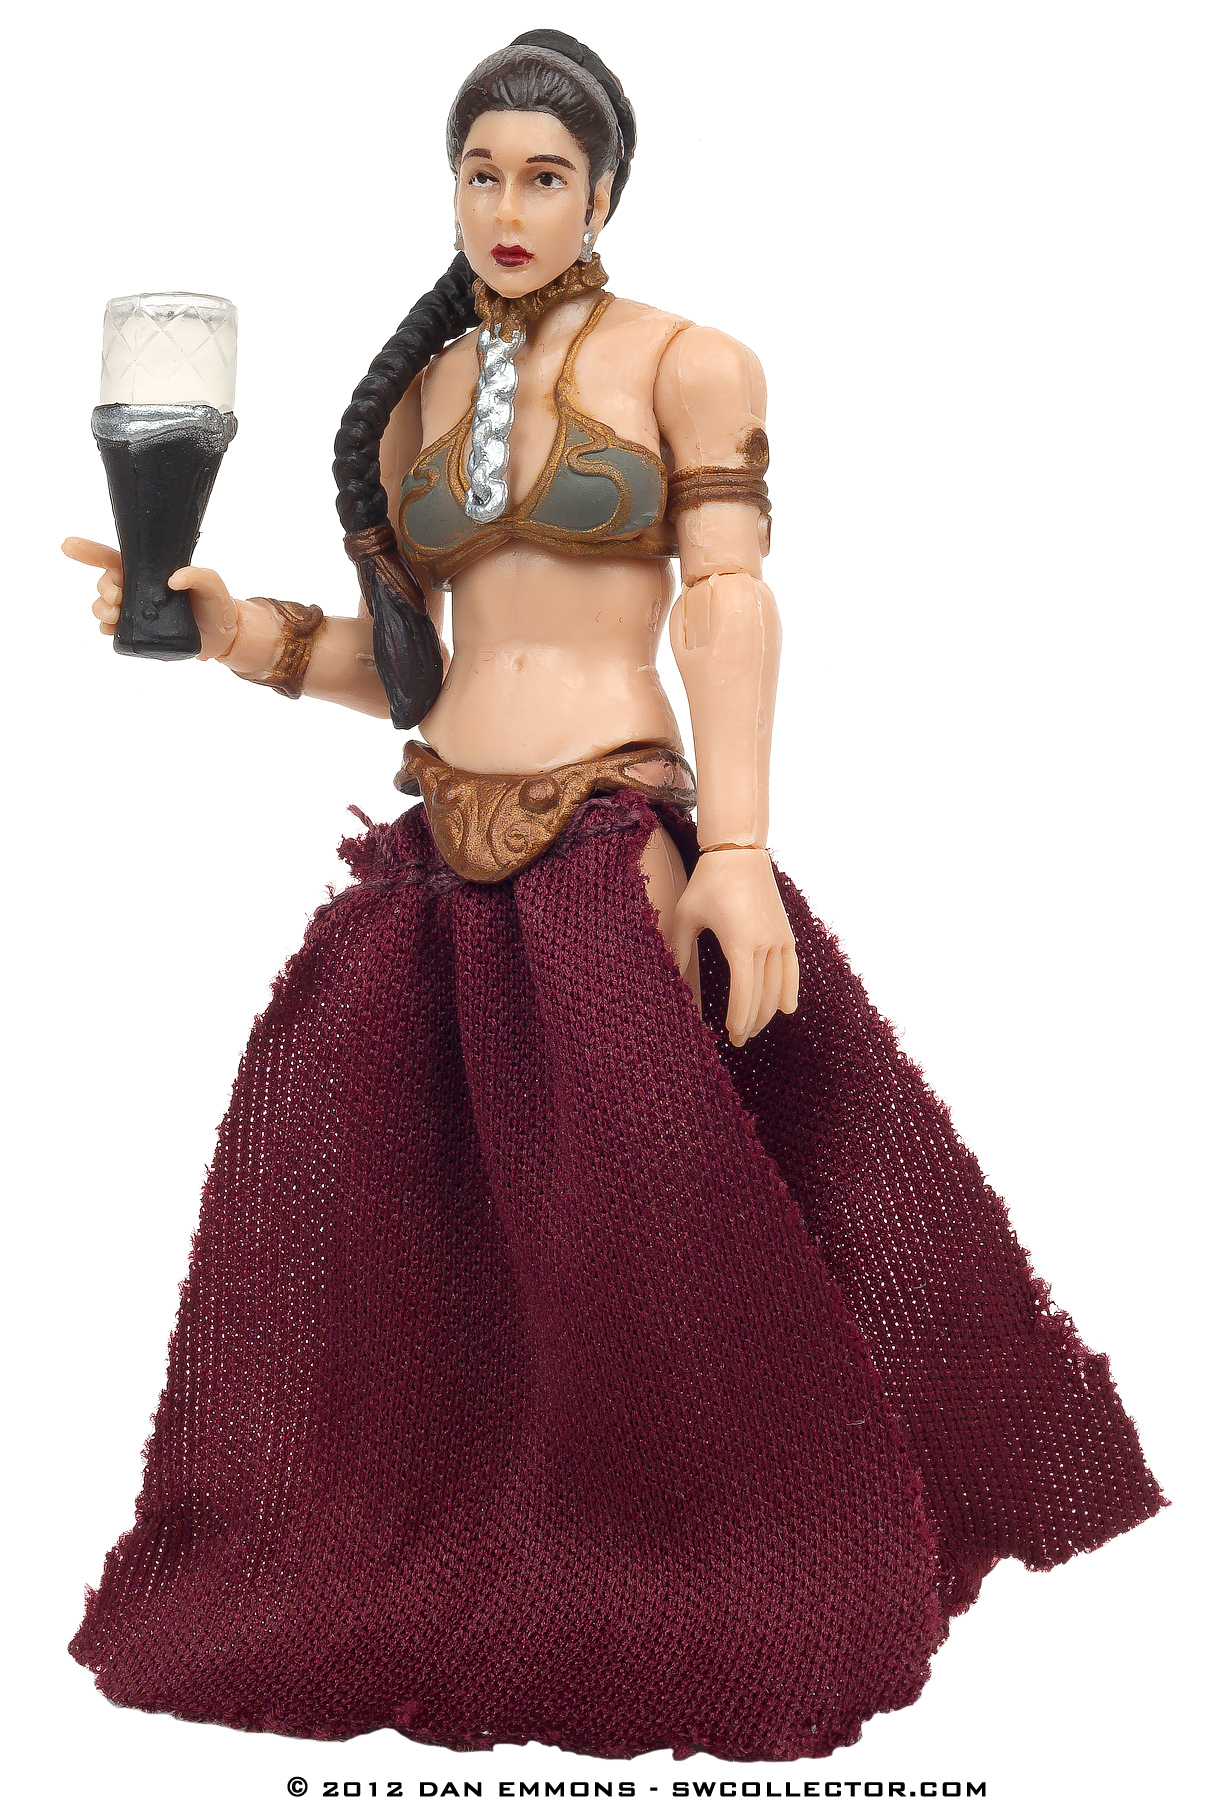 The Vintage Collection - VC64: Princess Leia (Slave Outfit)